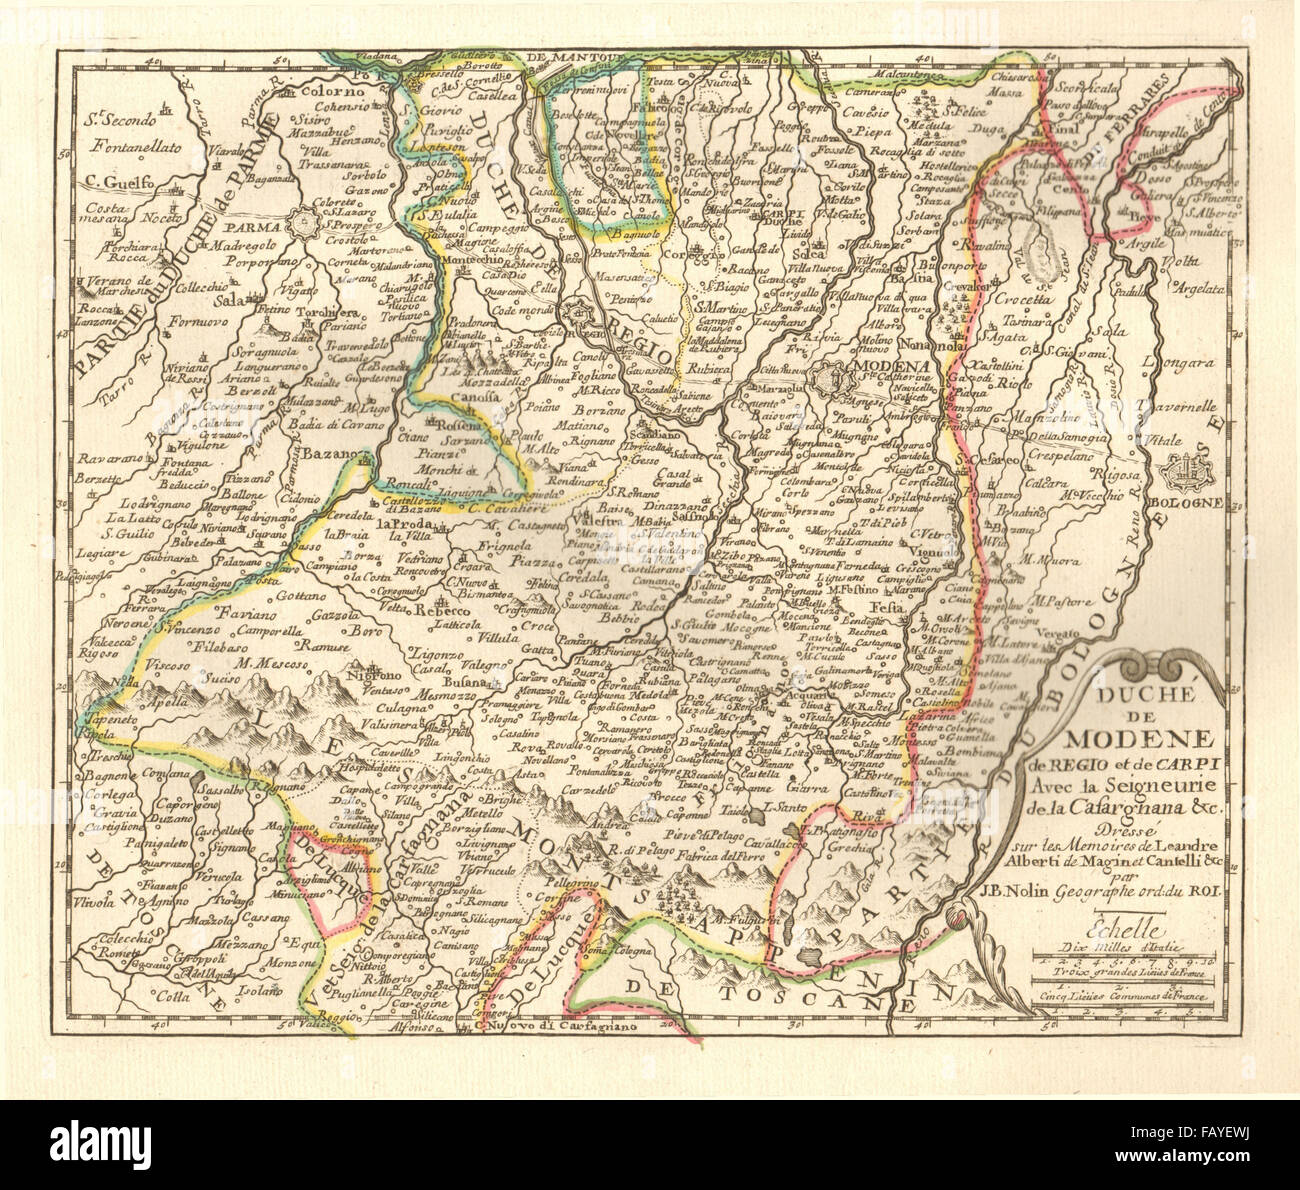 "Herzogtum de Modene de Regio et de Carpi" Herzogtum von Modena & Reggio. NOLIN c1725 Karte Stockfoto